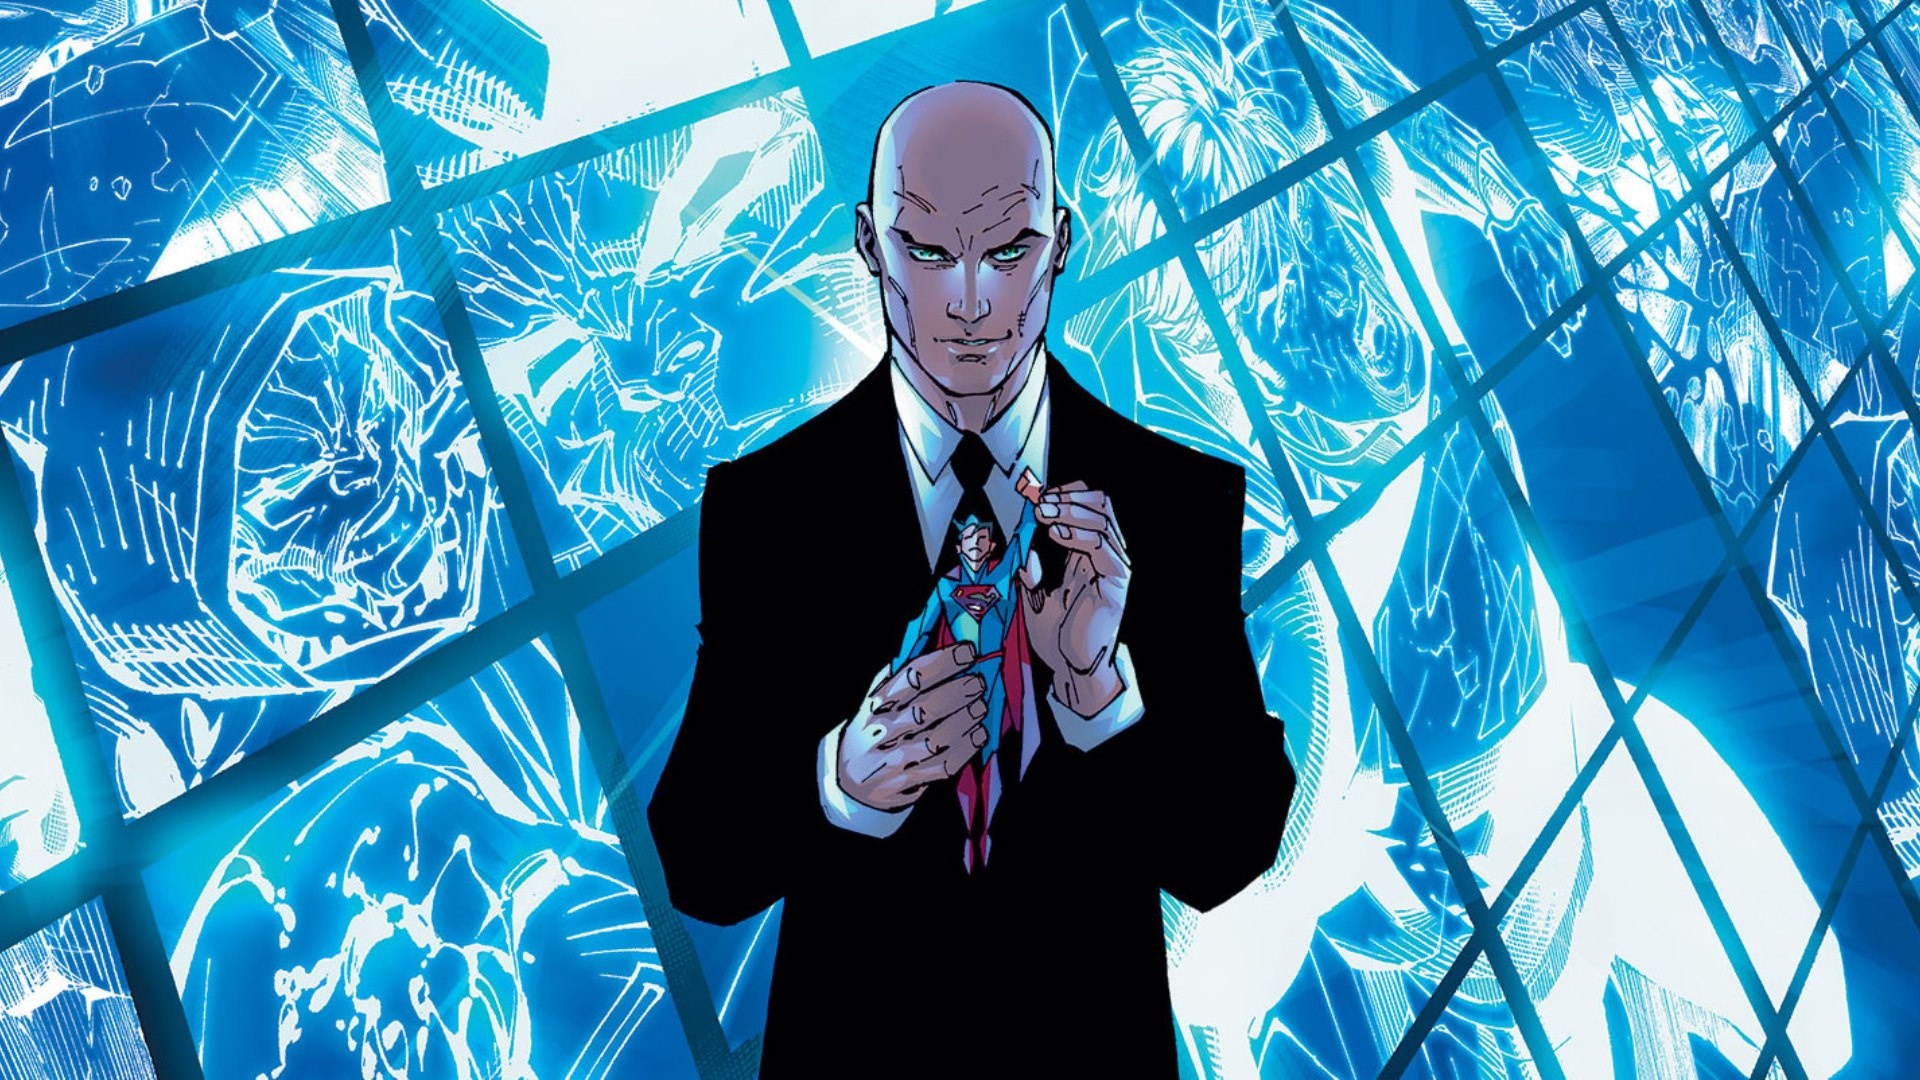 Lex Luthor: A major DC supervillain, The genius, ego-centric Metropolis businessman. 1920x1080 Full HD Background.